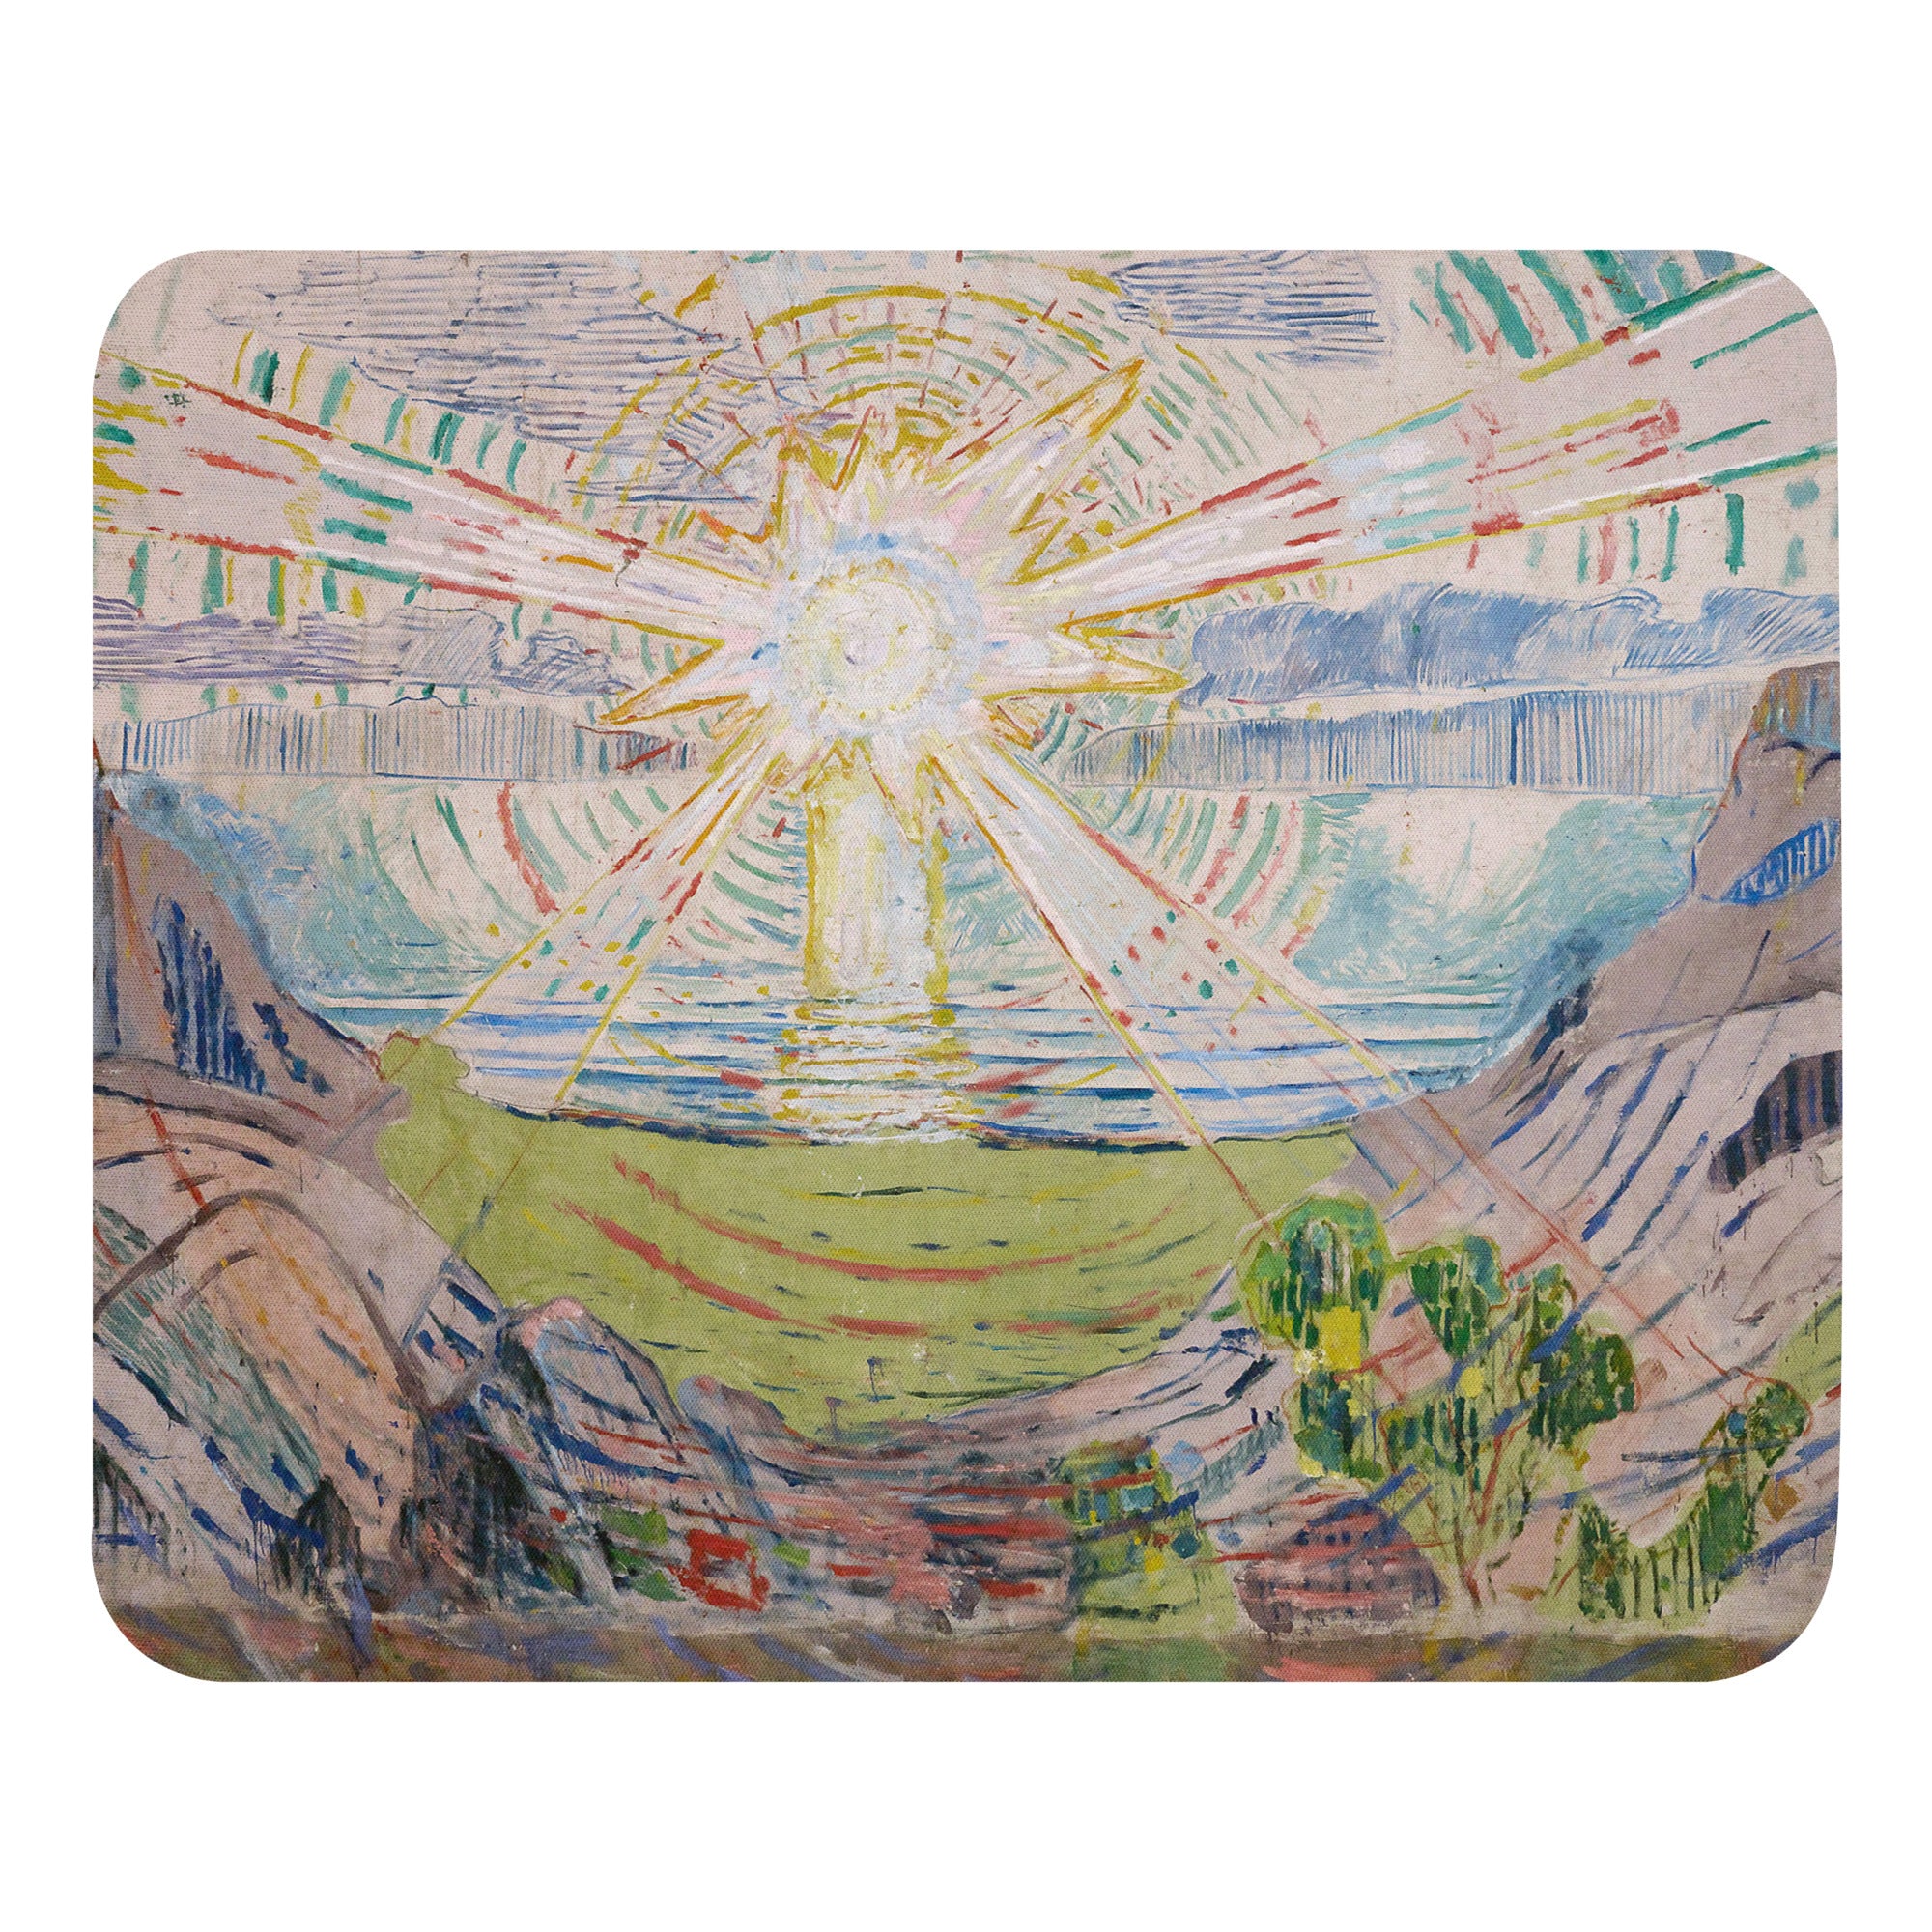 Edvard Munch 'The Sun' Famous Painting Mouse Pad | Premium Art Mouse Pad